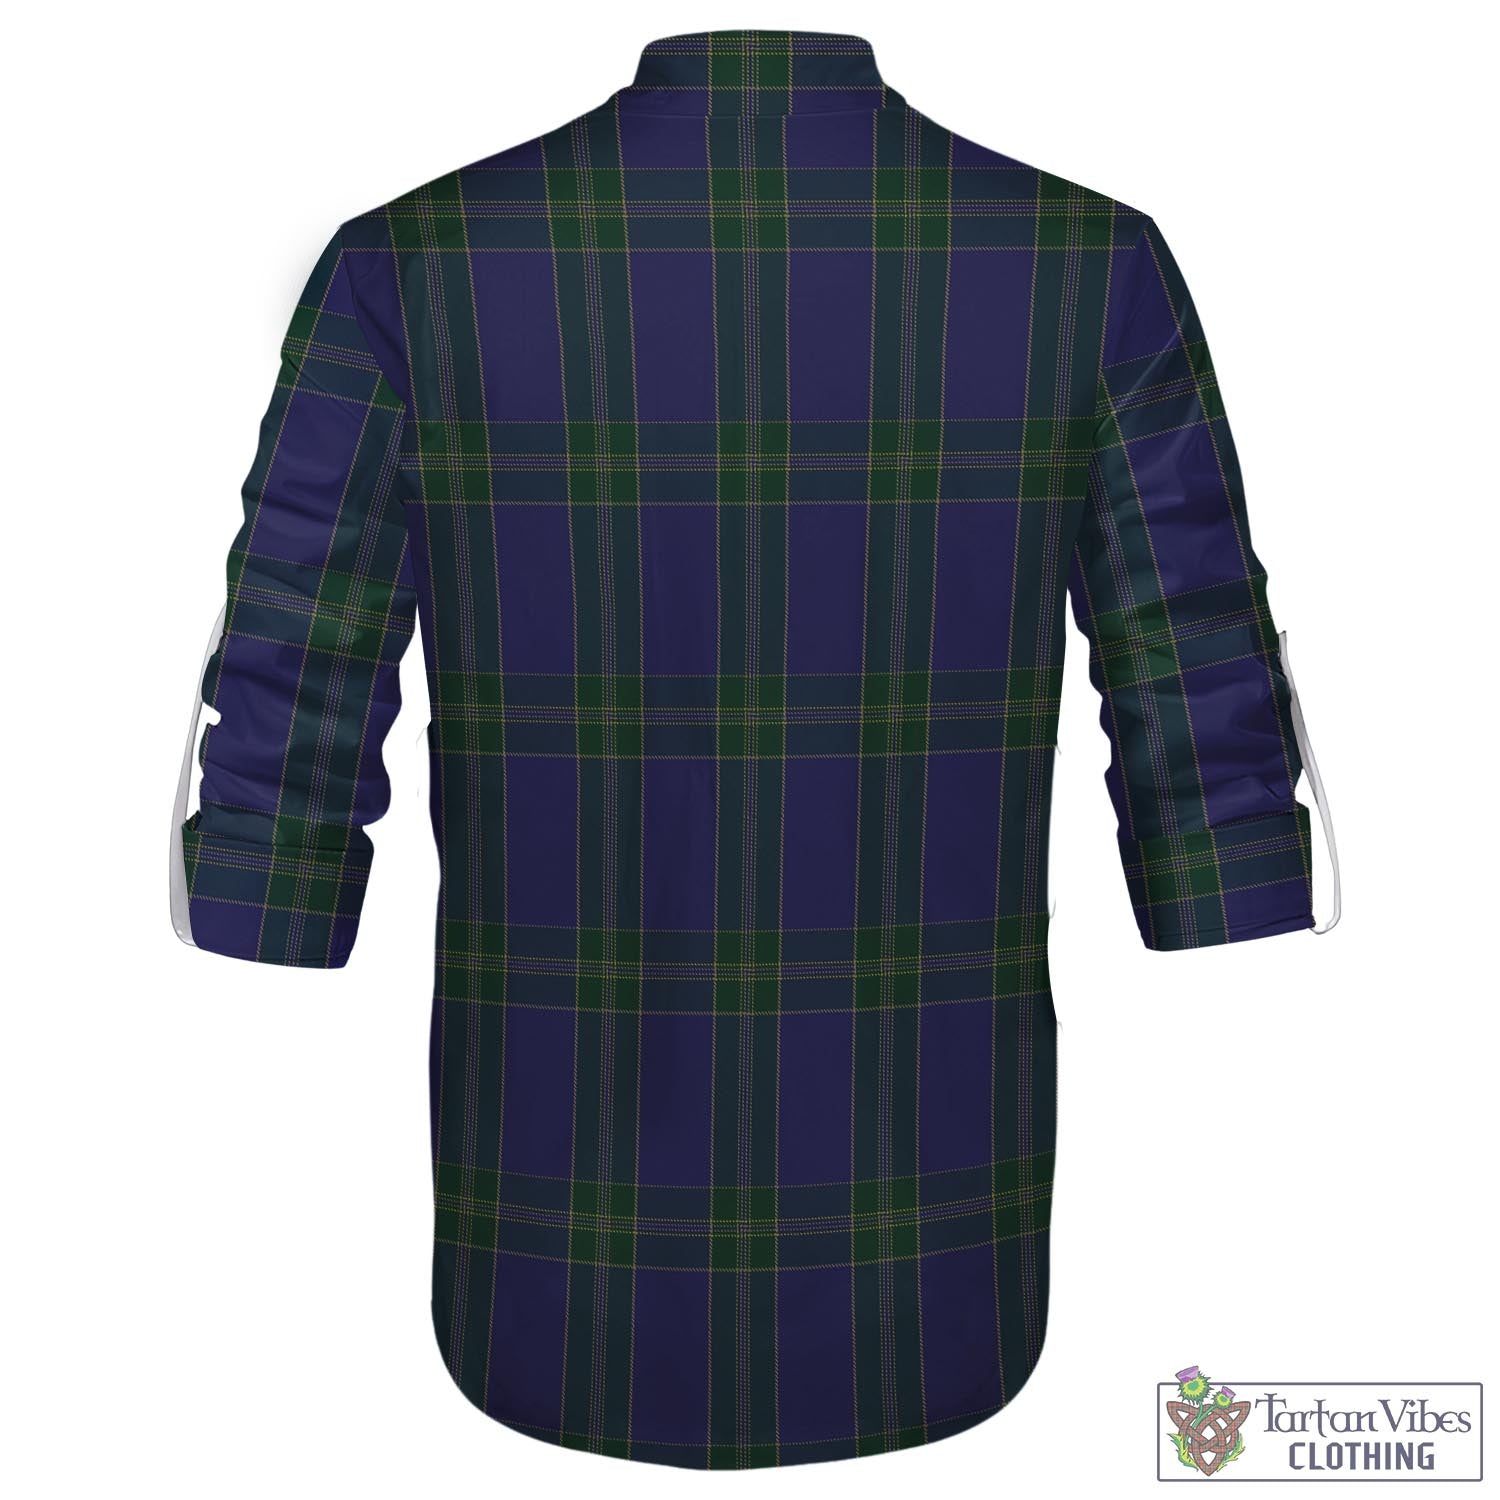 Tartan Vibes Clothing Lewis of Wales Tartan Men's Scottish Traditional Jacobite Ghillie Kilt Shirt